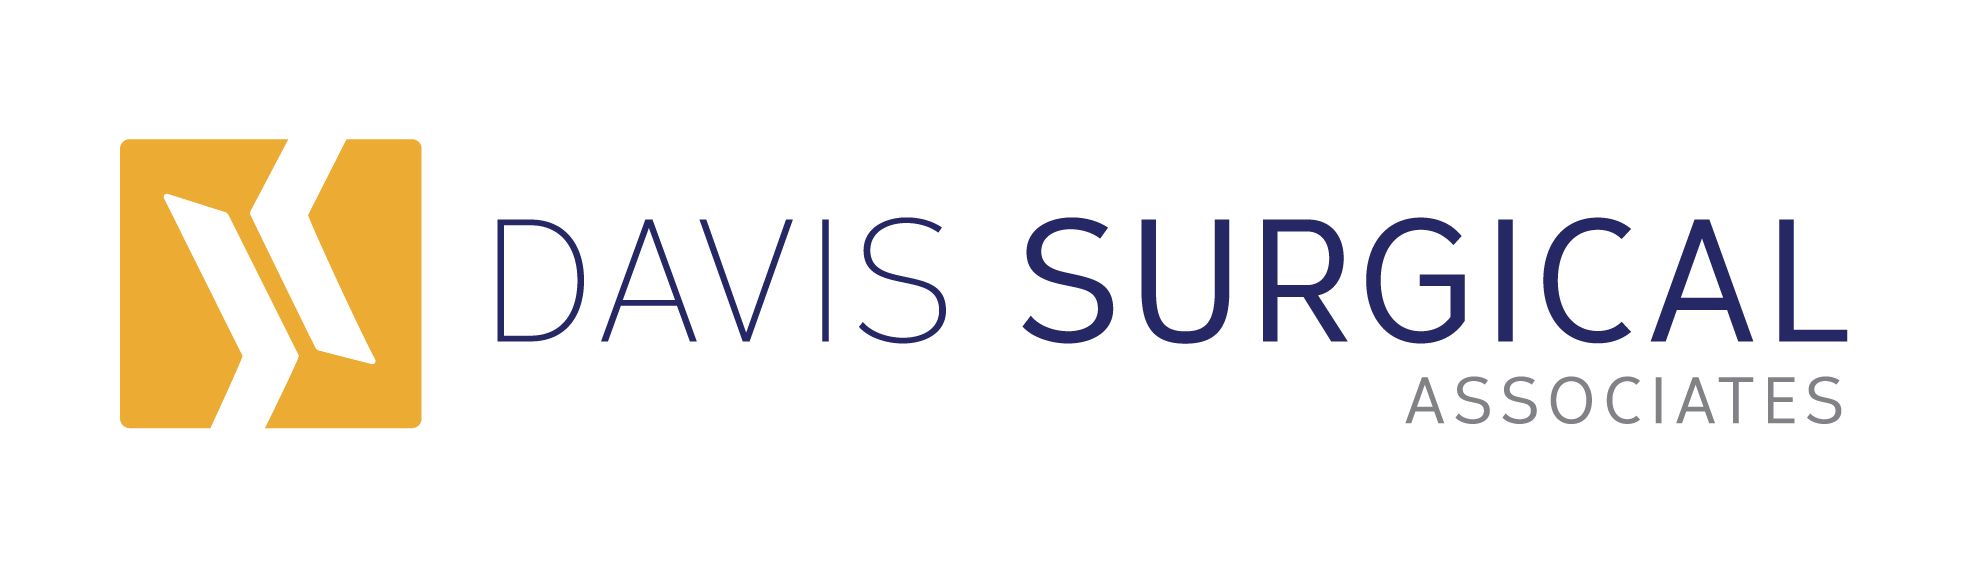 davis-surgical-associates